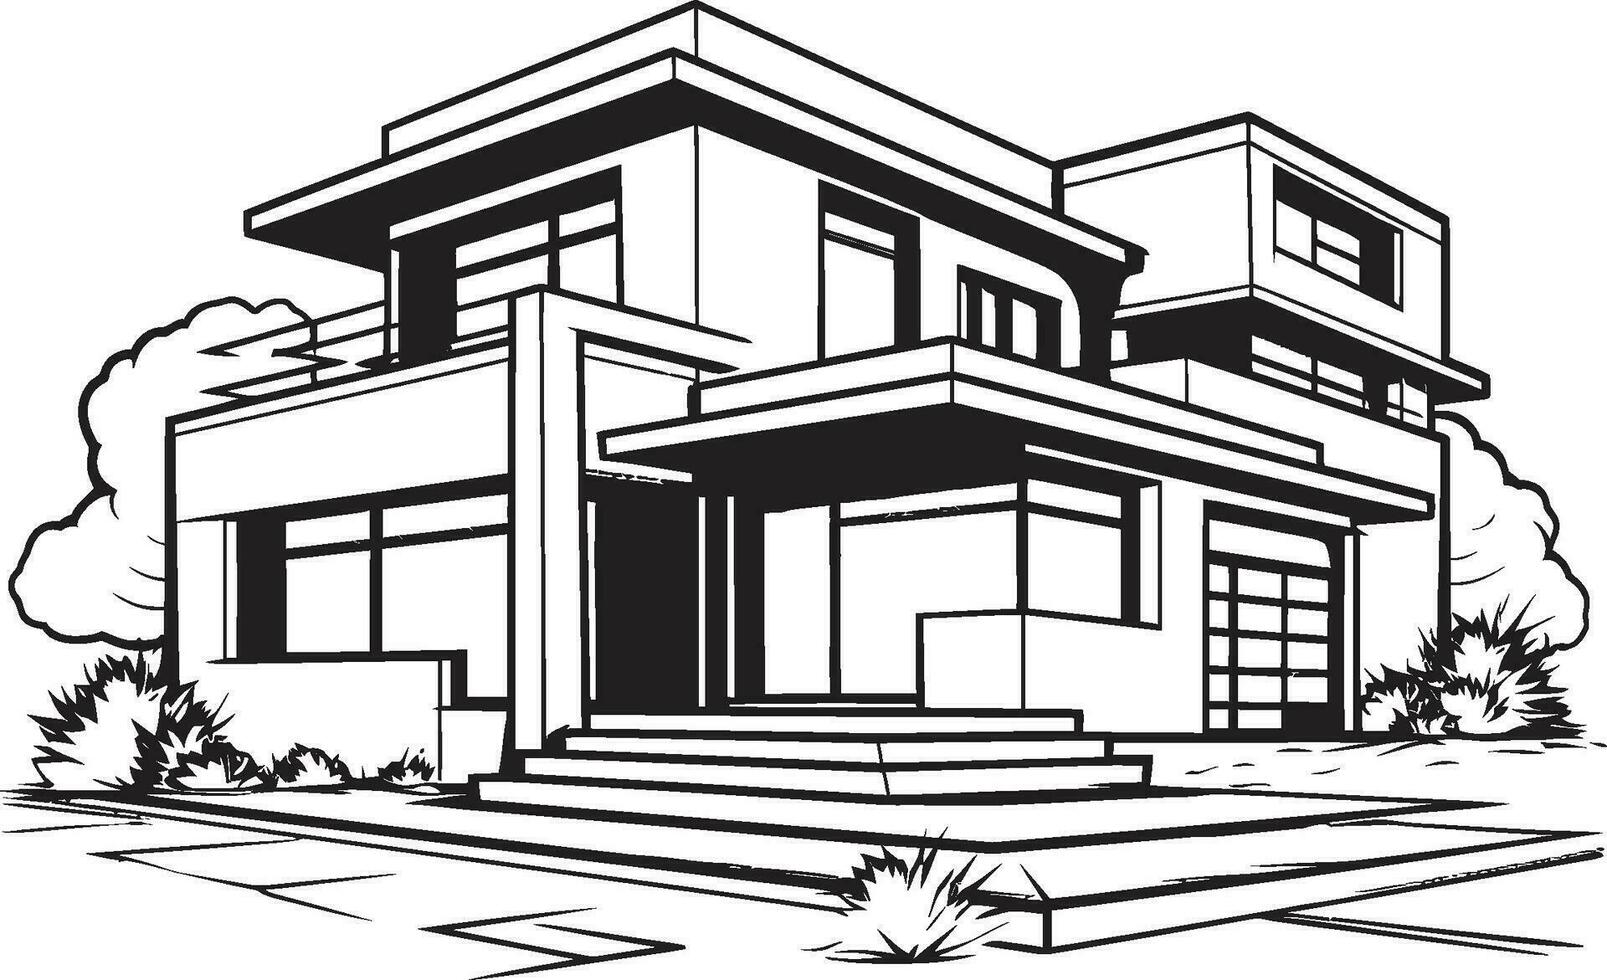 firma residencia símbolo grueso casa bosquejo emblema vigoroso granja marca negrita casa diseño en vector